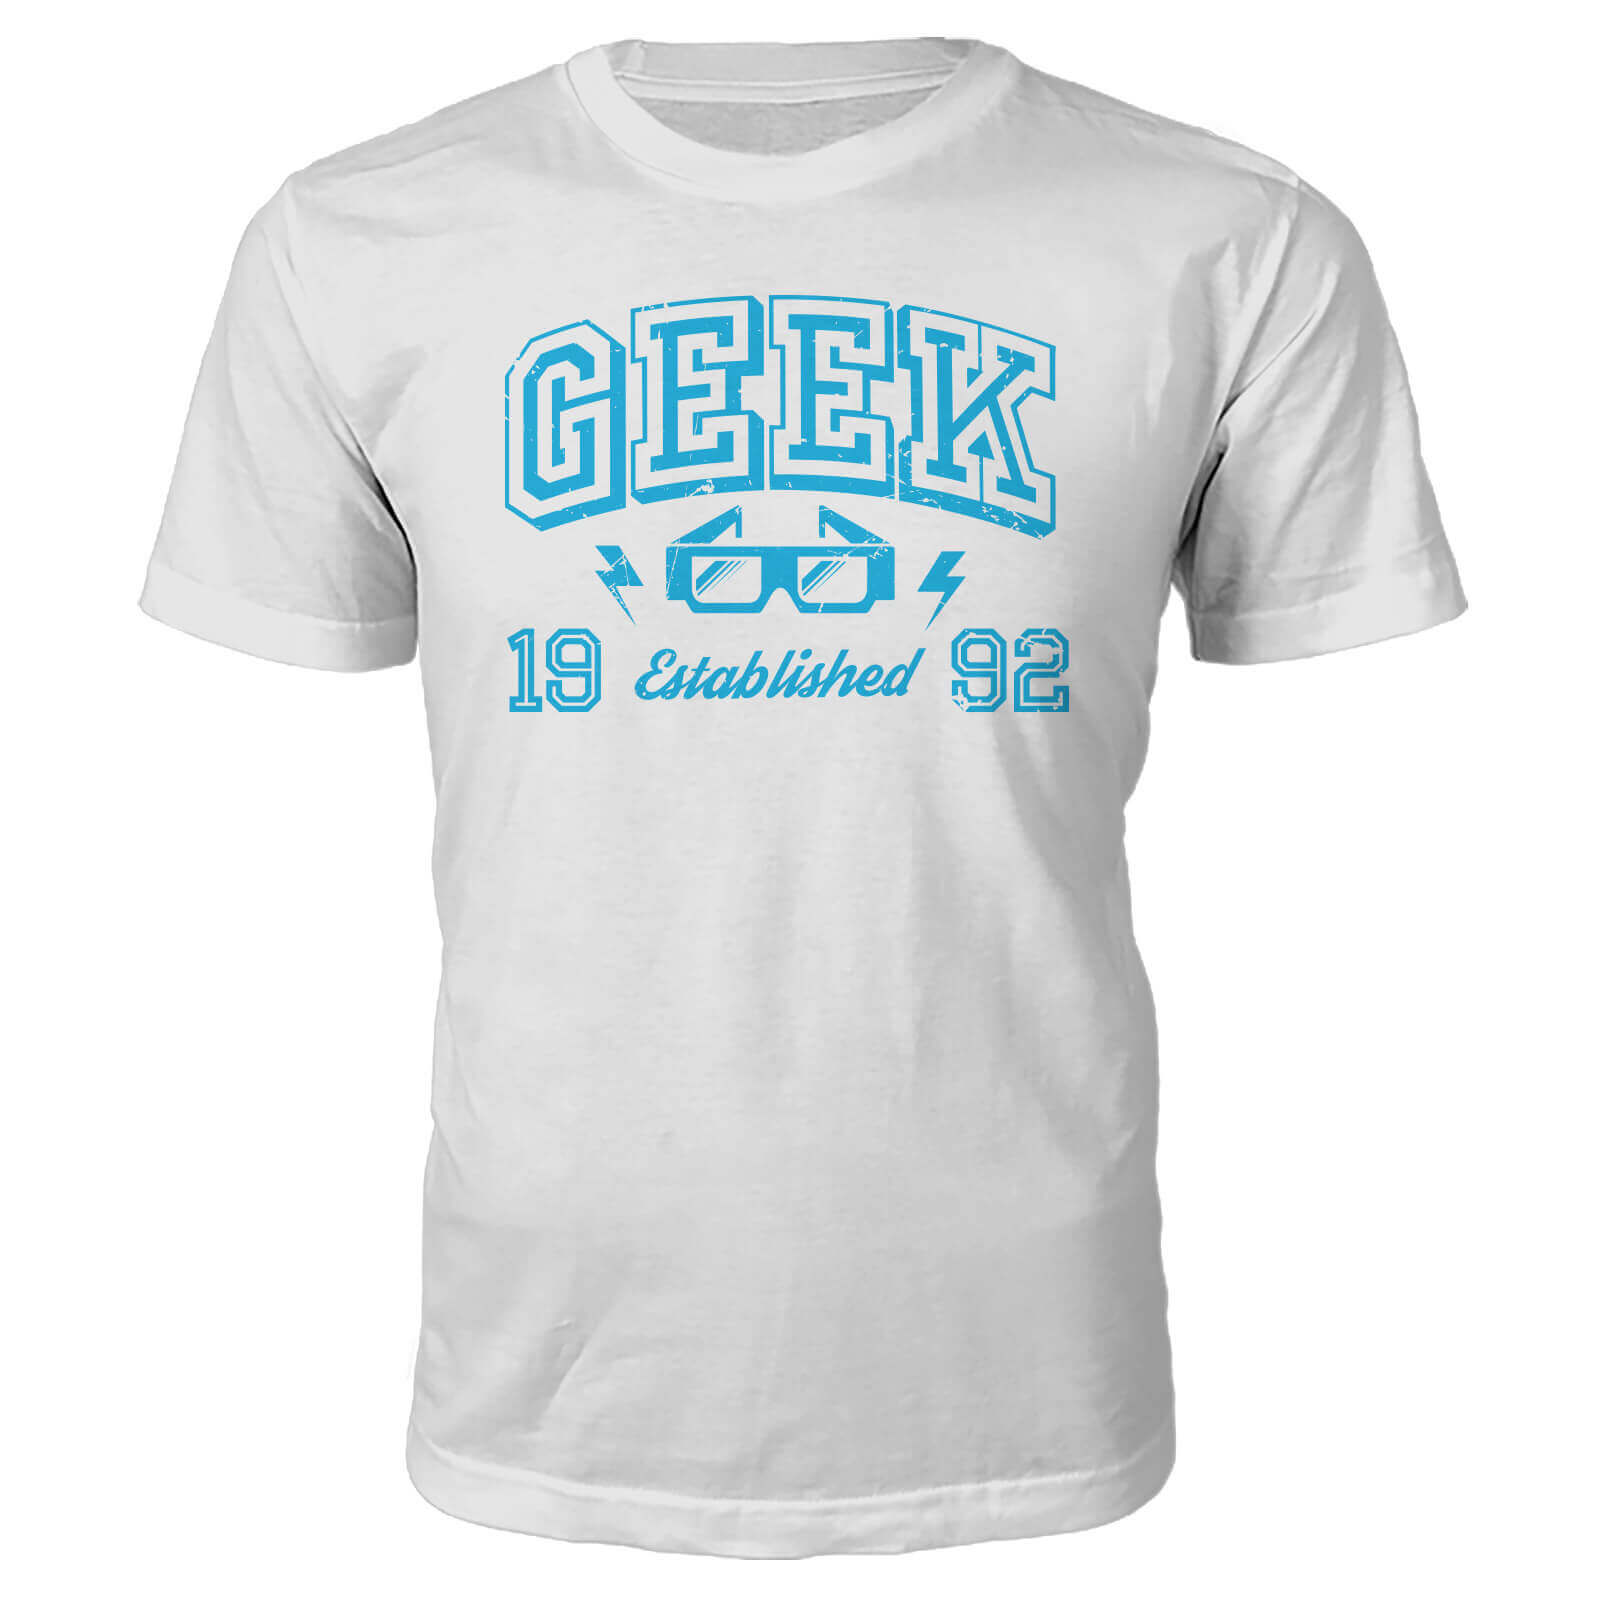 Geek Established 1990's T-Shirt- White - S - 1992